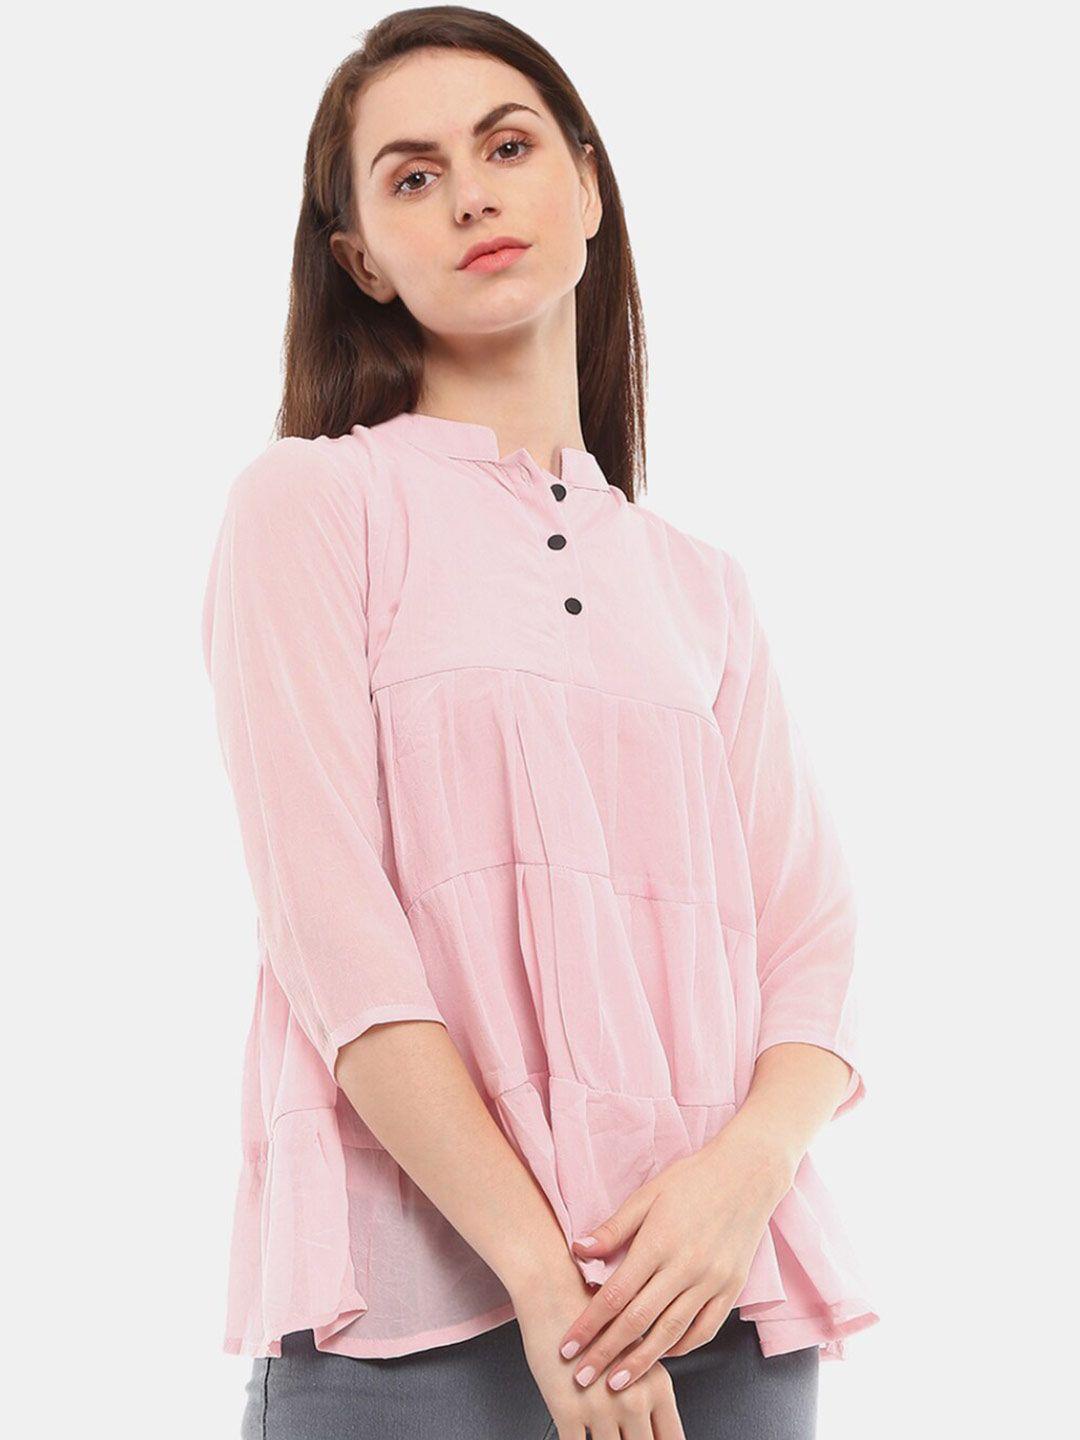 v-mart women western solid pink mandarin collar a-line tiered top